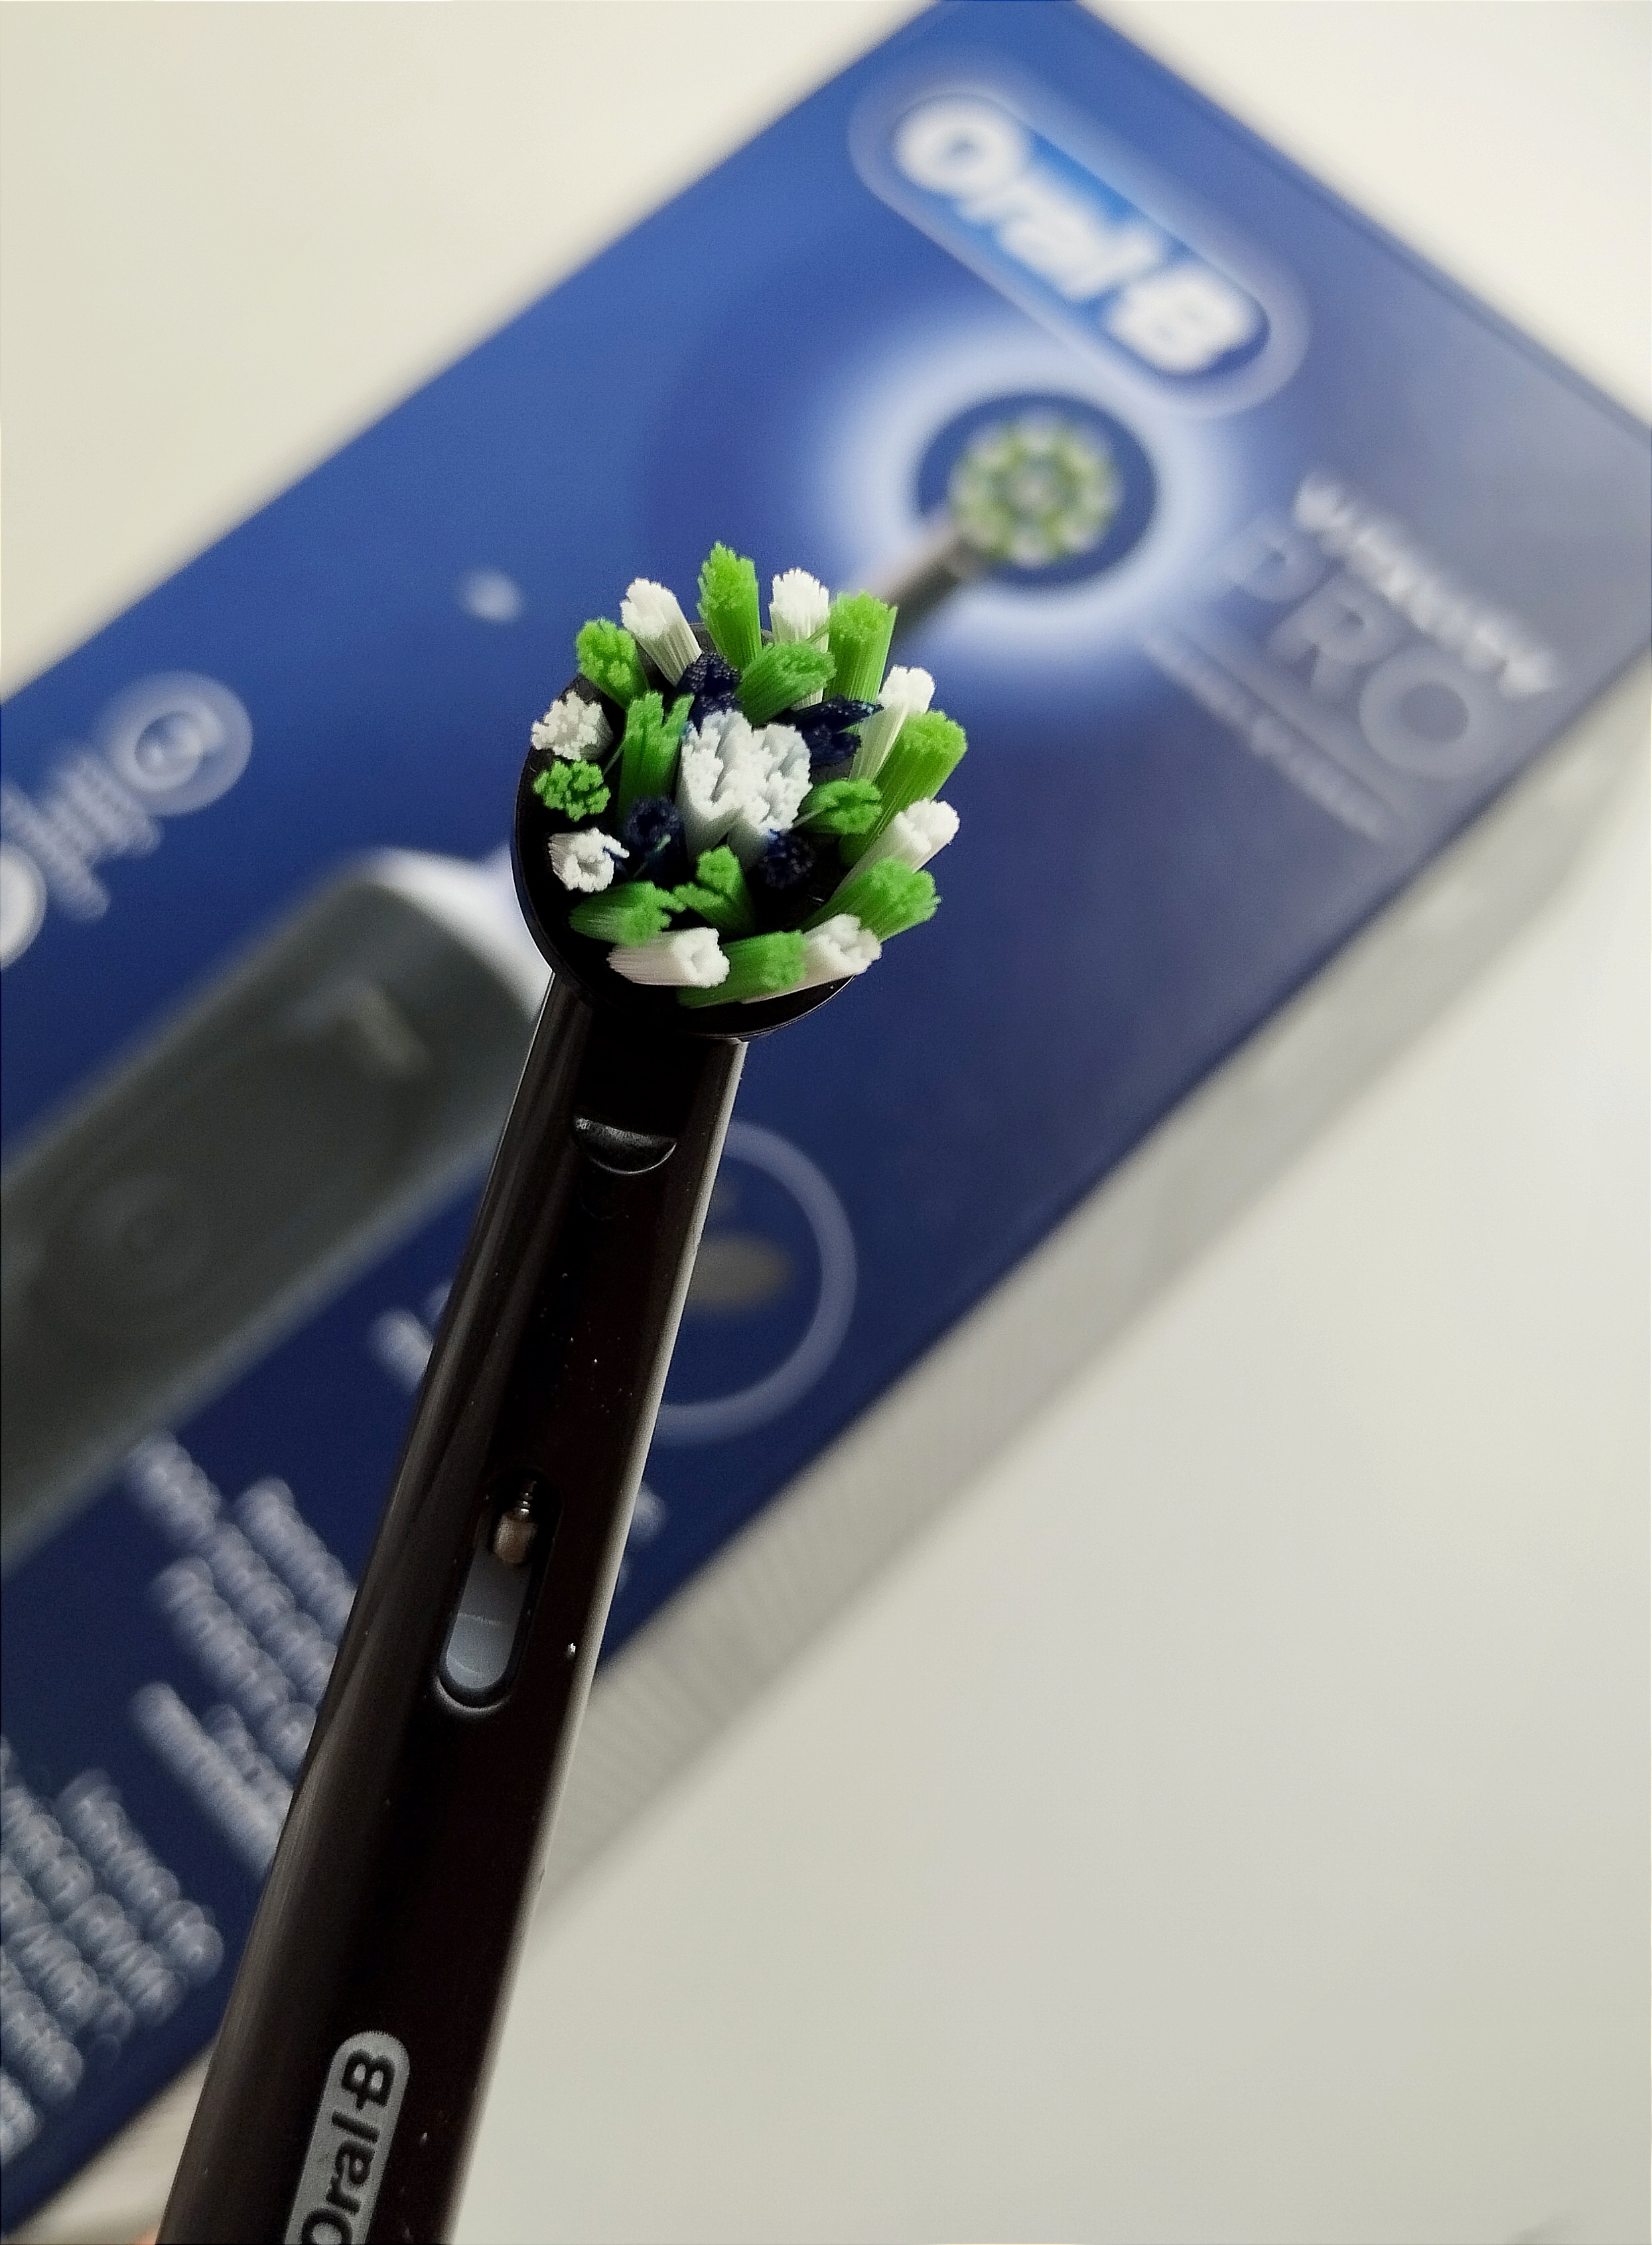 Електрична зубна щітка Oral-b Vitality Pro × Clean black